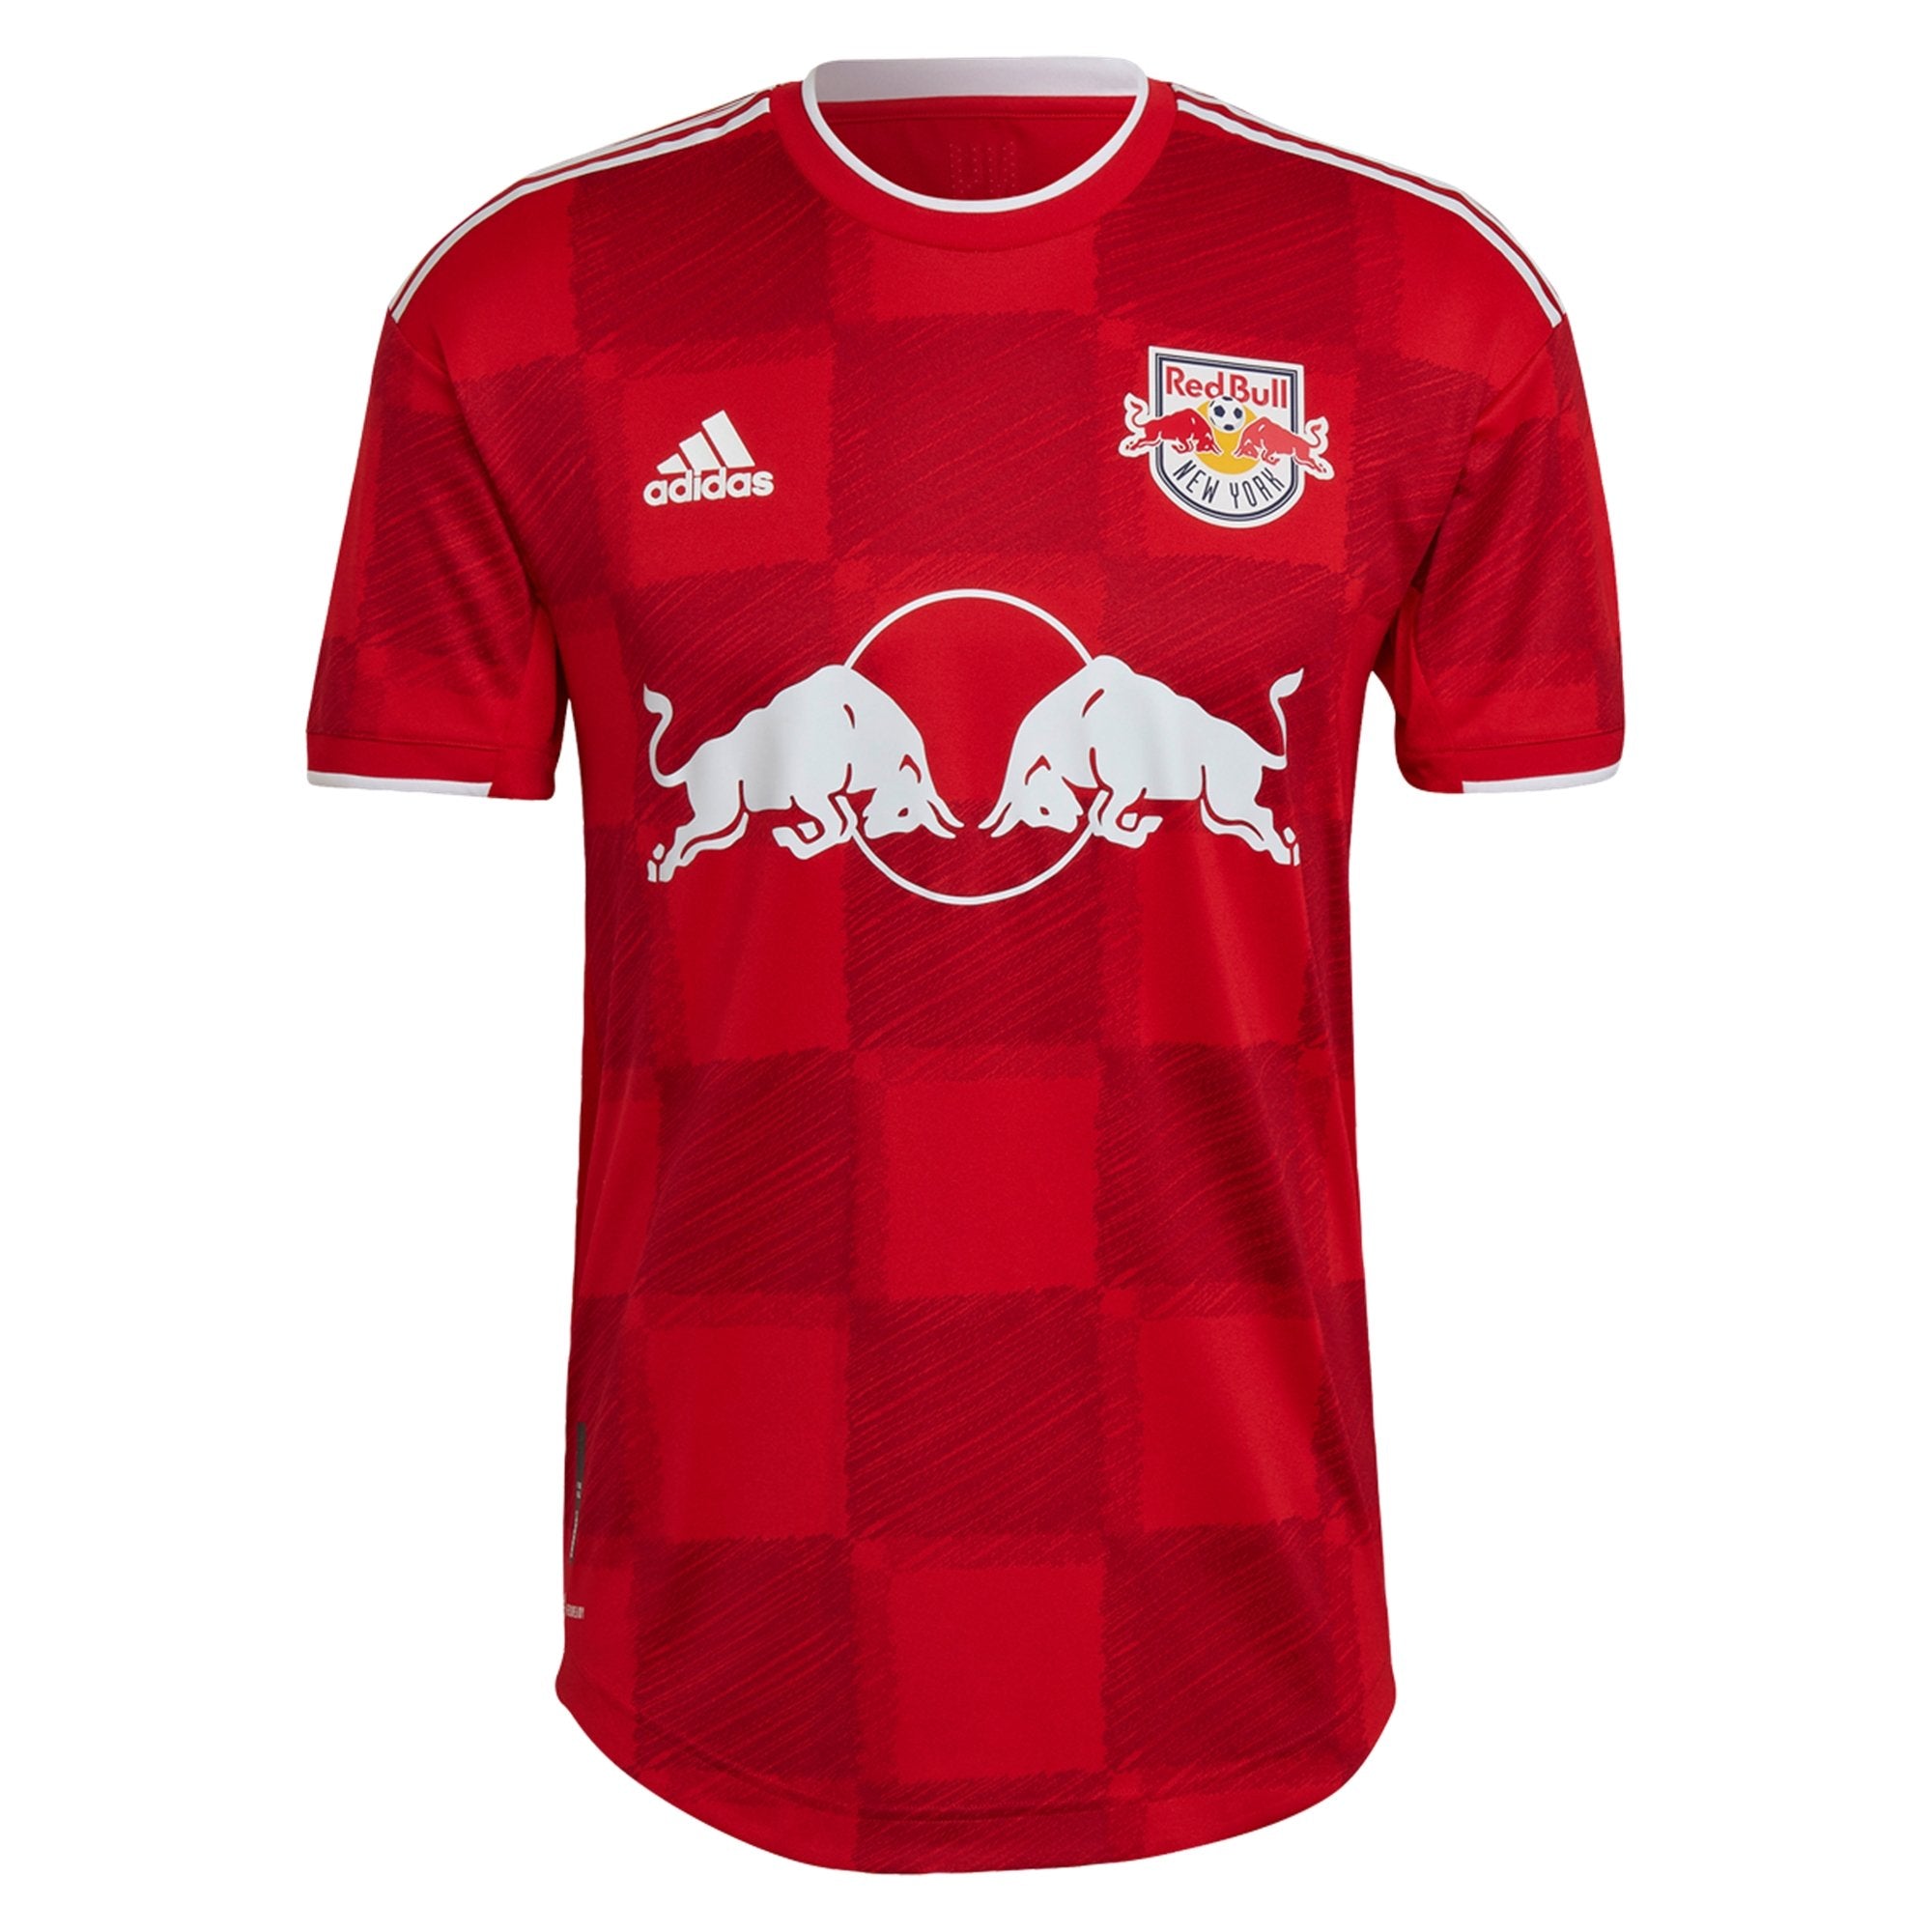 adidas, Shirts, Adidas Mens New York Red Bulls Soccer Jersey Mls